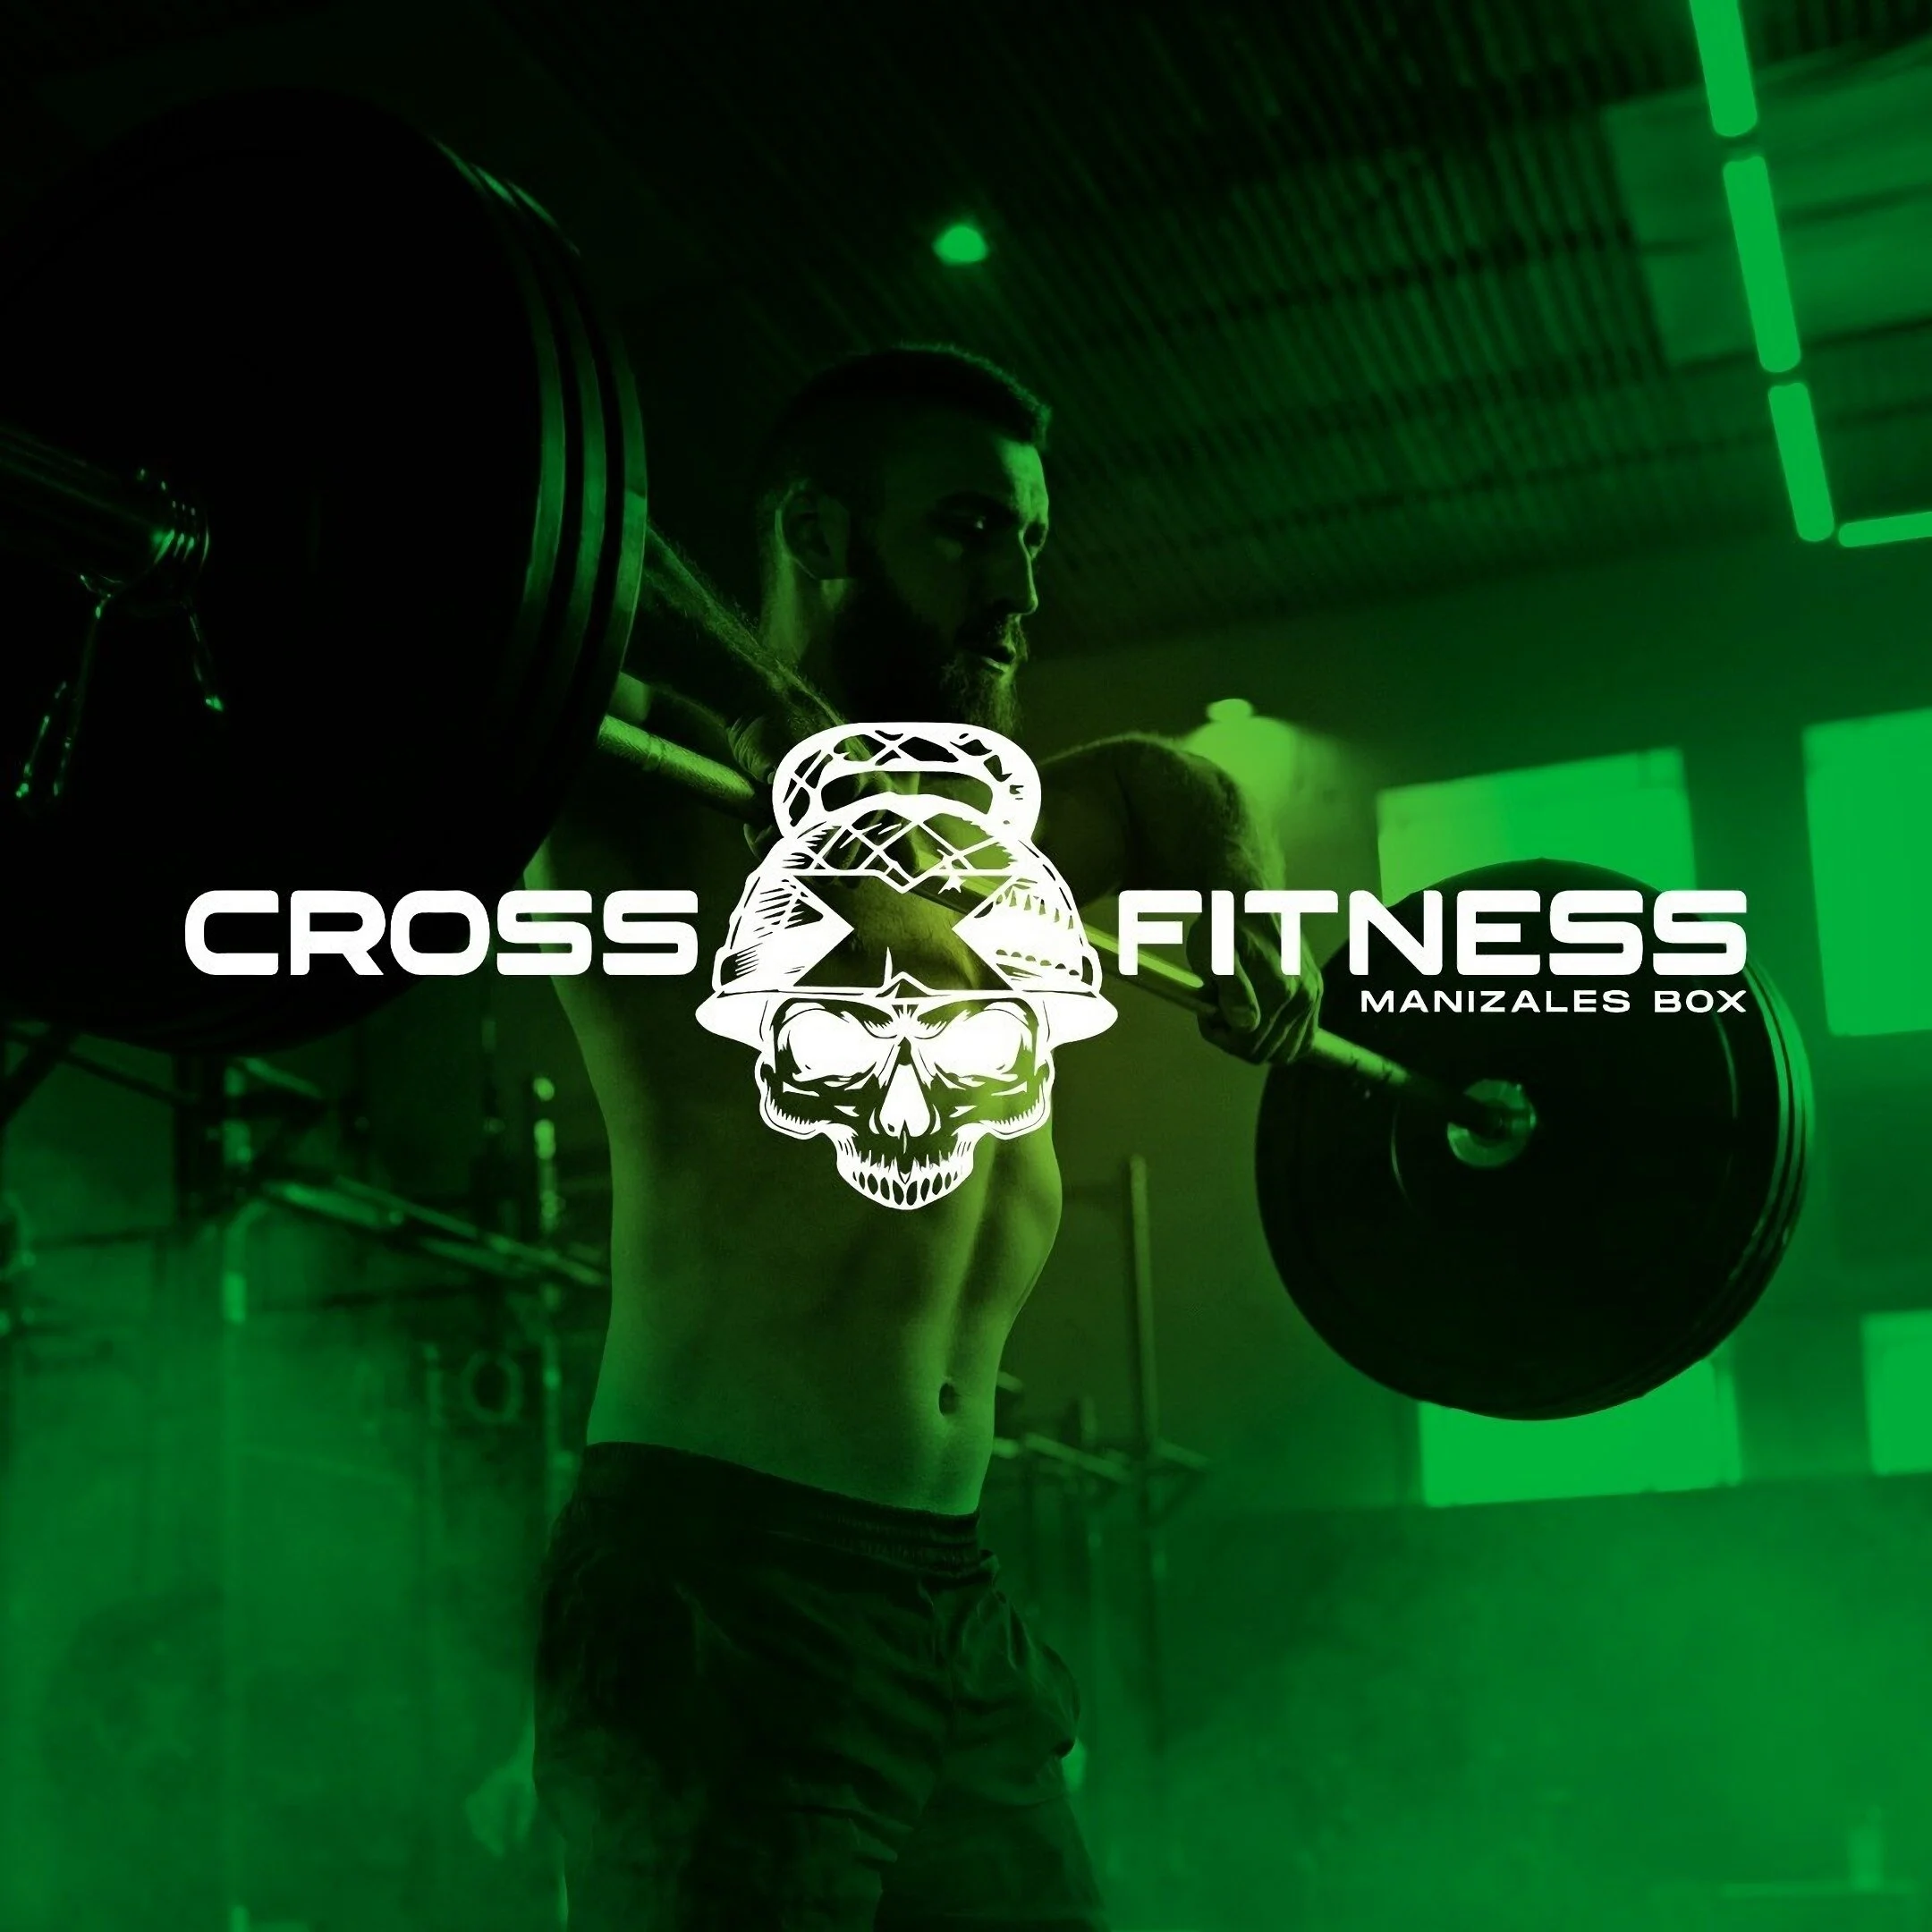 Crossfit-cross-x-fitness-manizales-8060